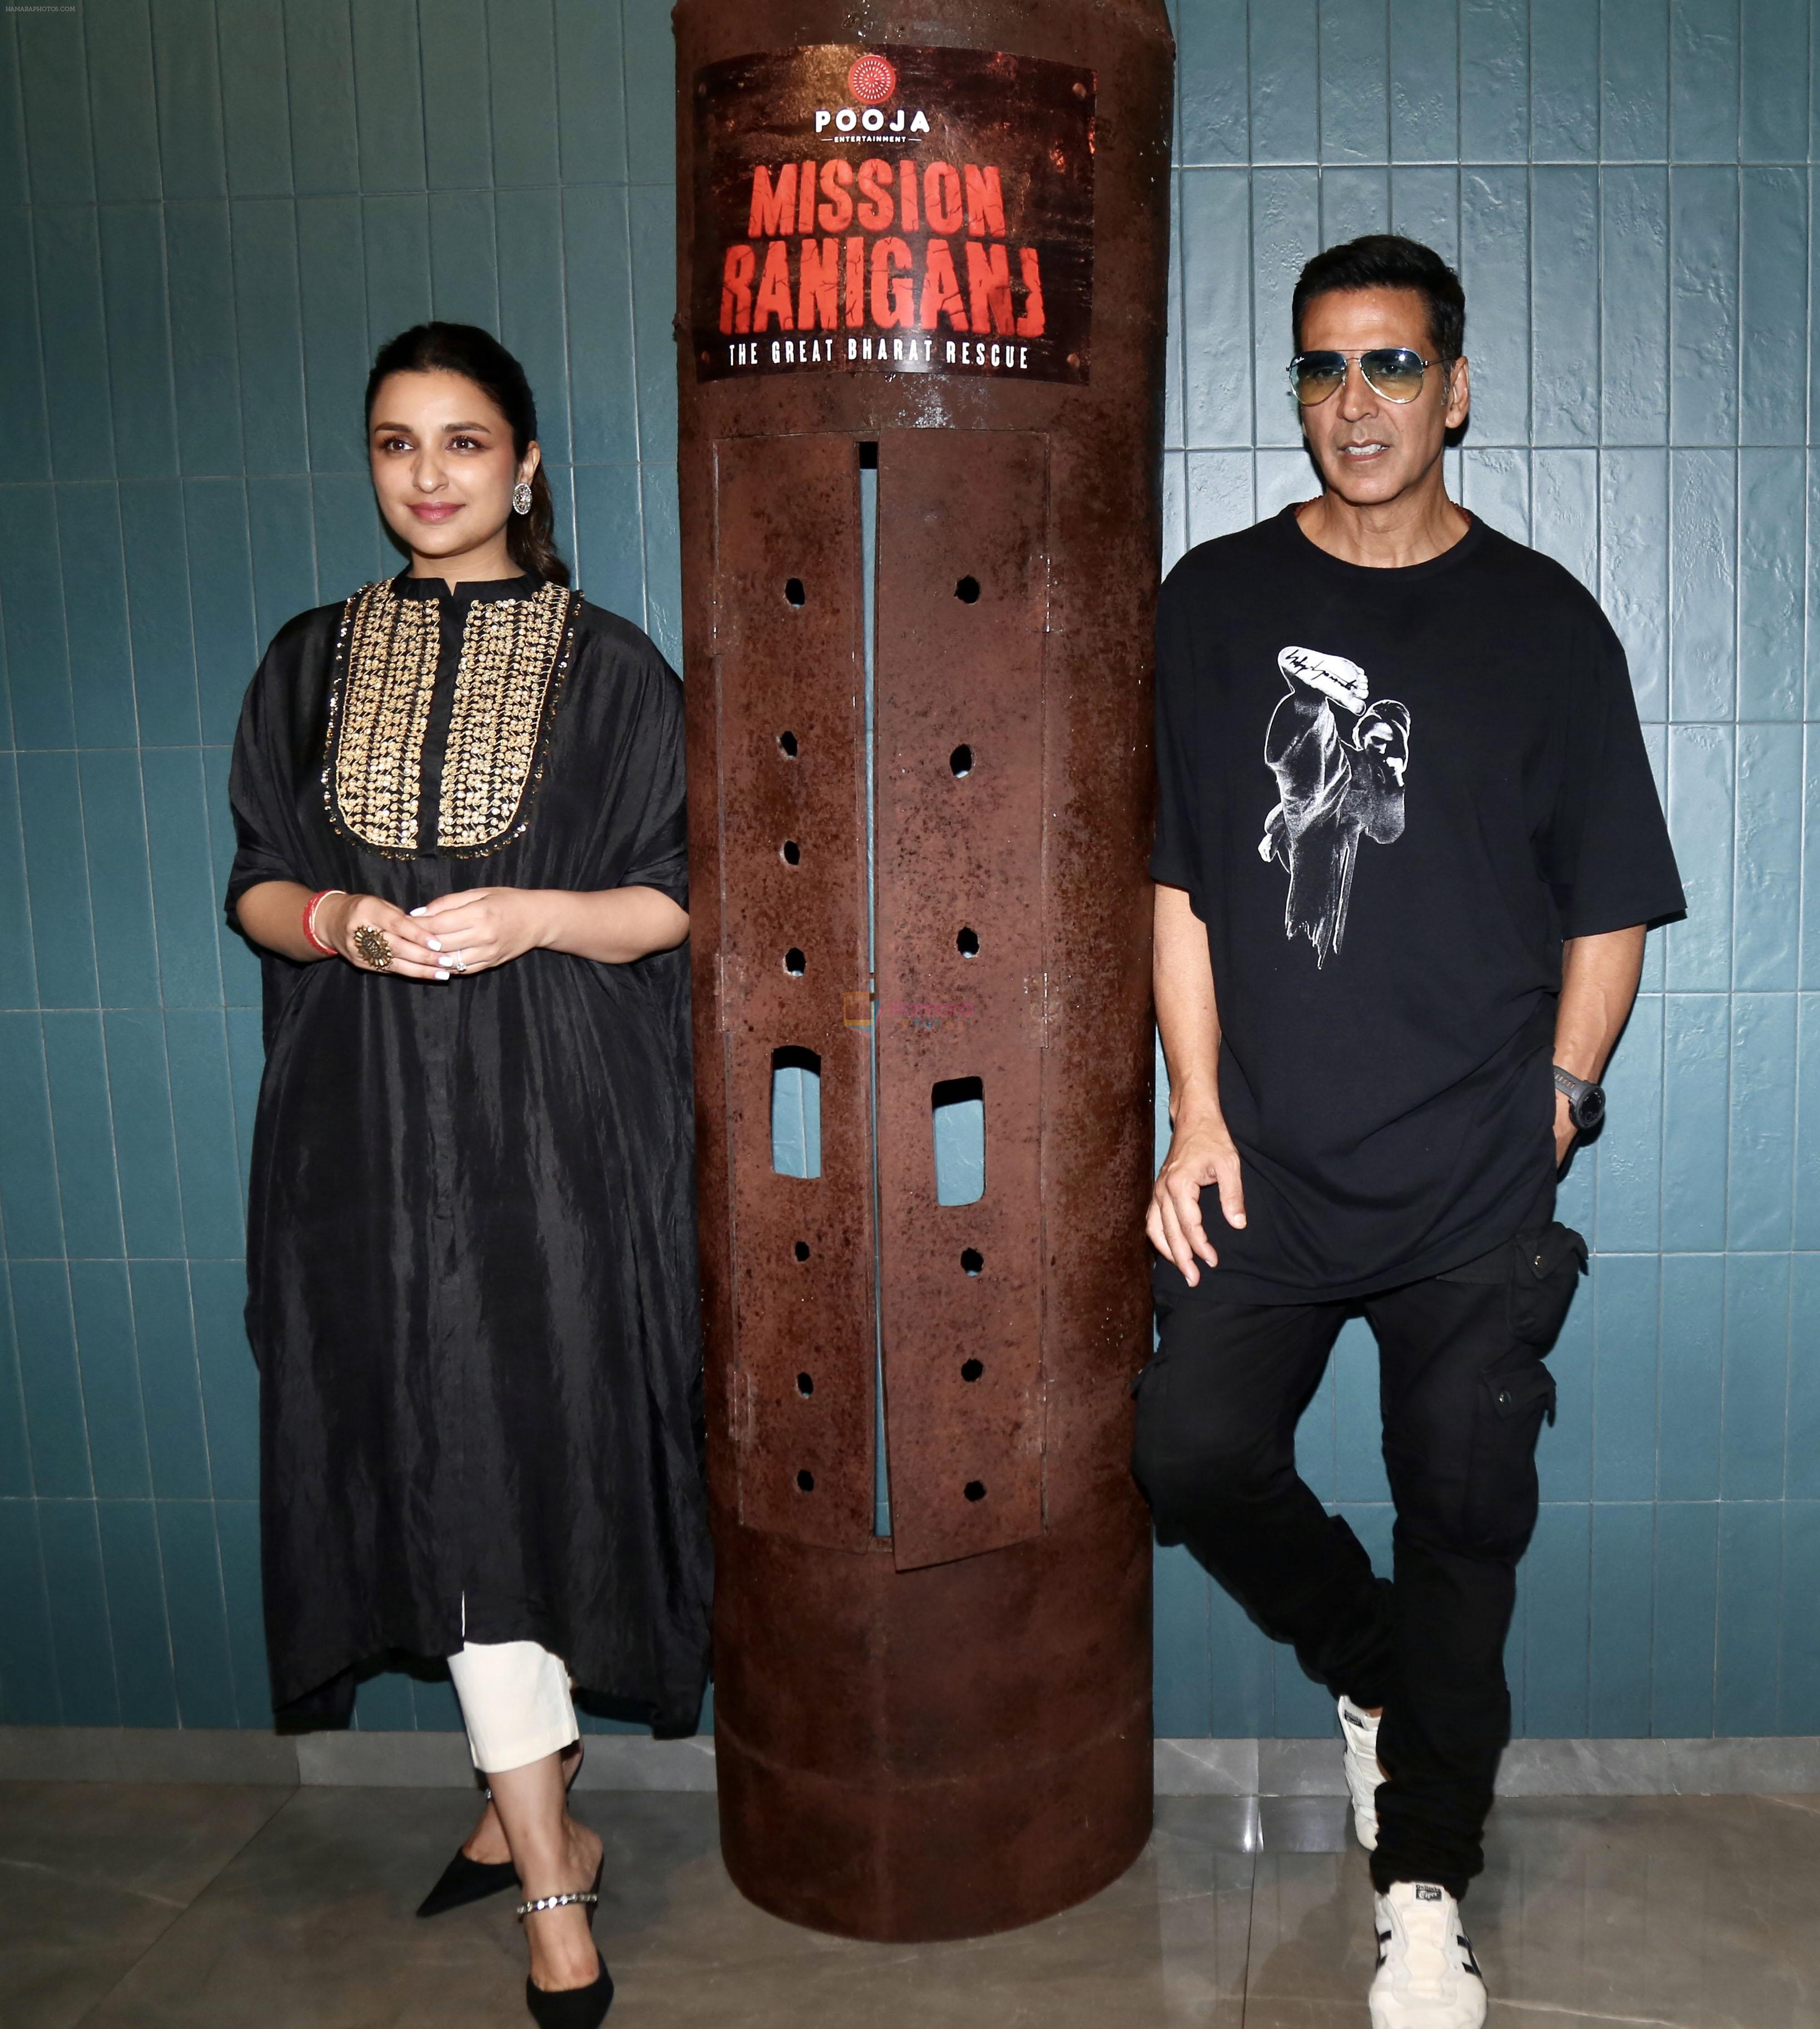 Akshay Kumar, Parineeti Chopra posing for Mission Raniganj film promo at Pooja Entertainment Office on 14th Sept 2023